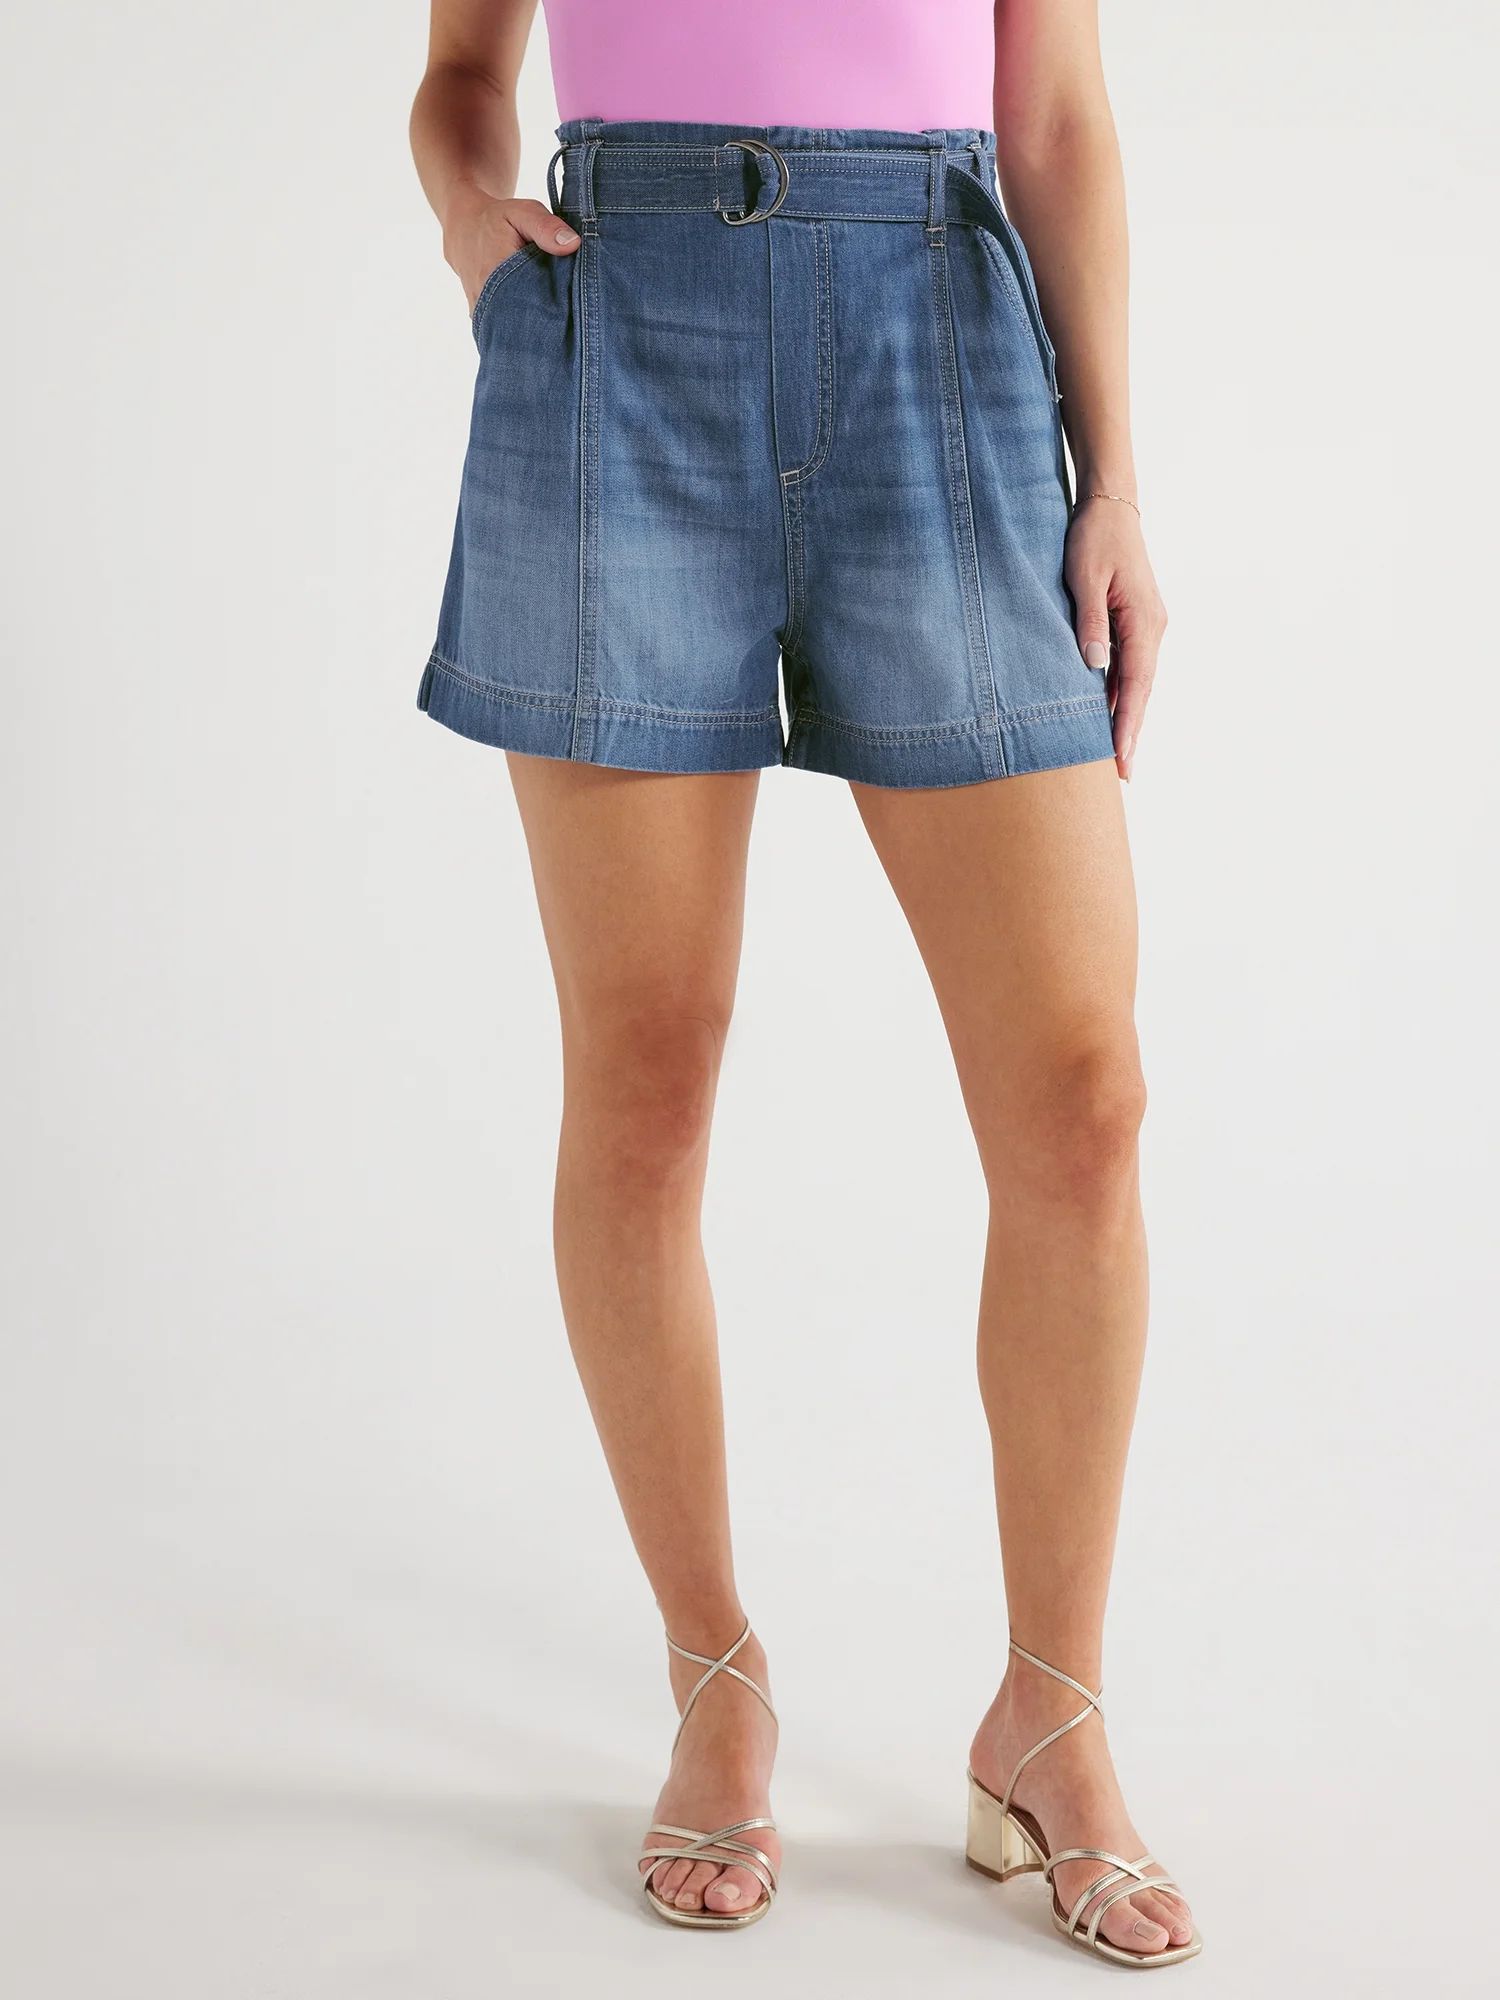 Sofia Jeans Women's Lightweight Luxe Super High Rise Utility Shorts, 3.5" Inseam, Sizes XS-XXXL | Walmart (US)